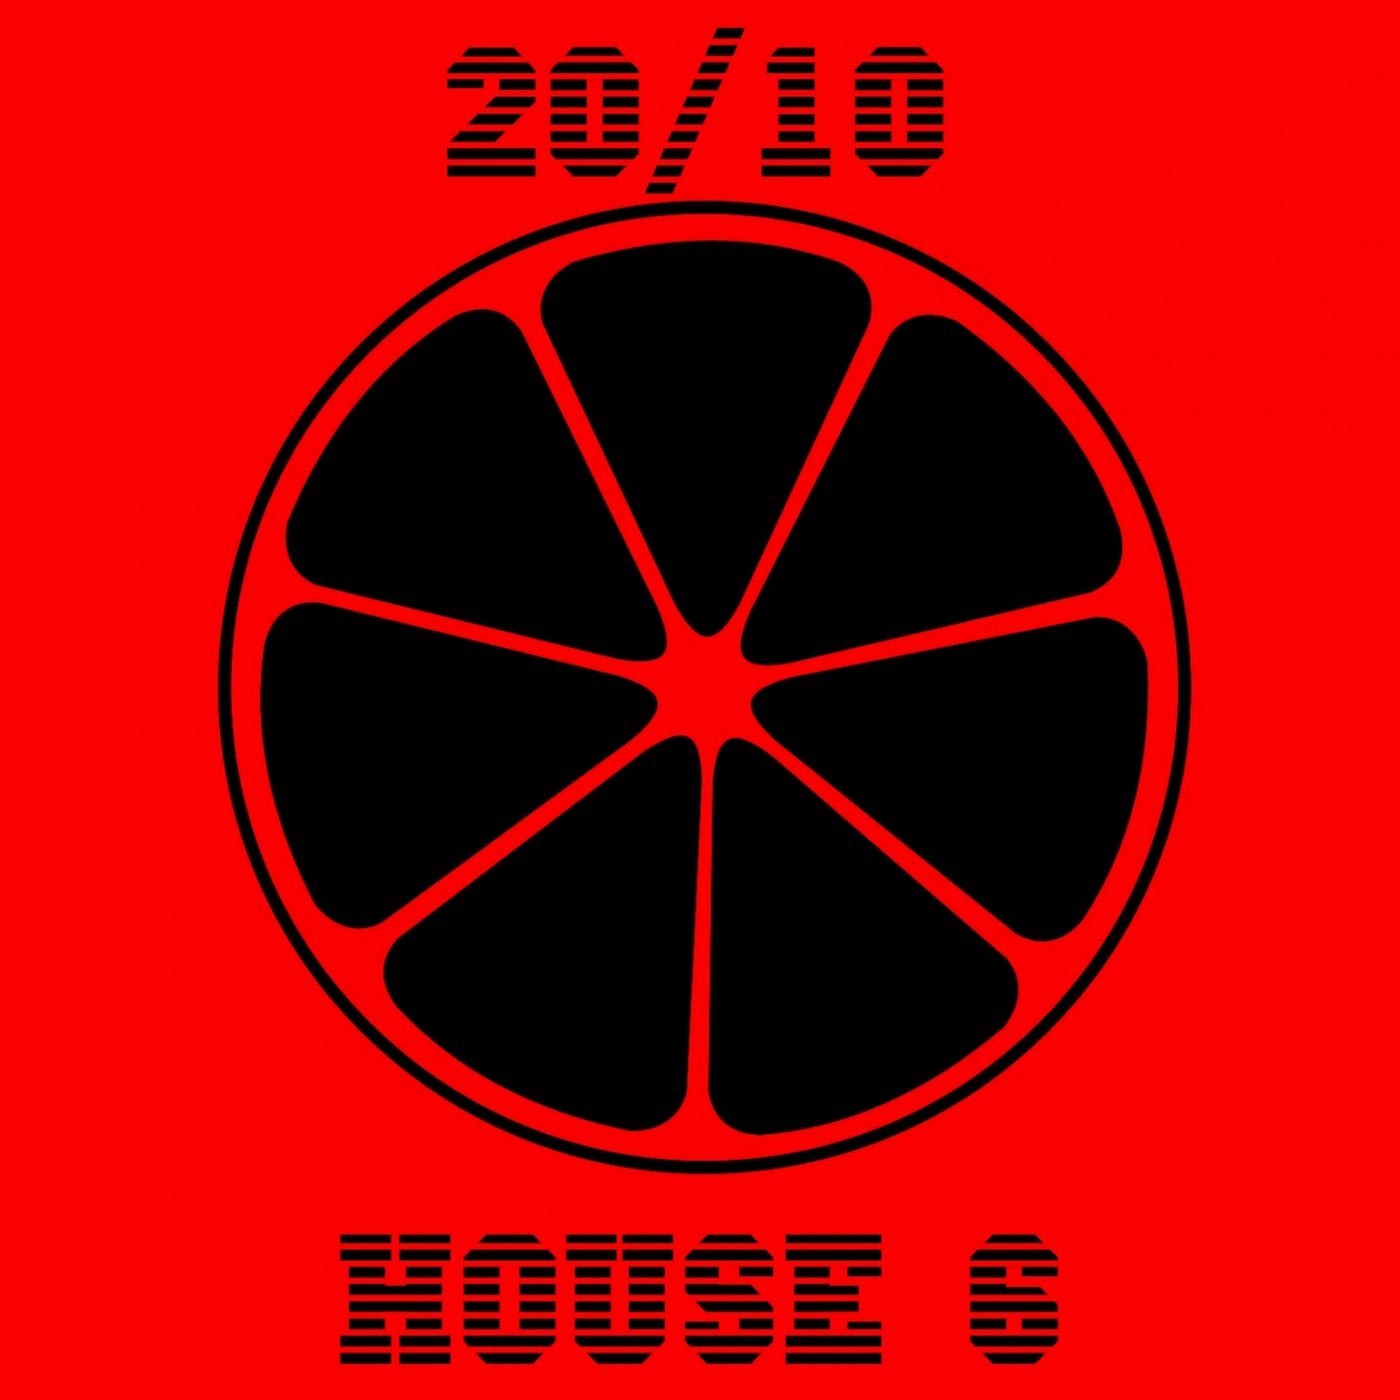 20/10 House, Vol. 6